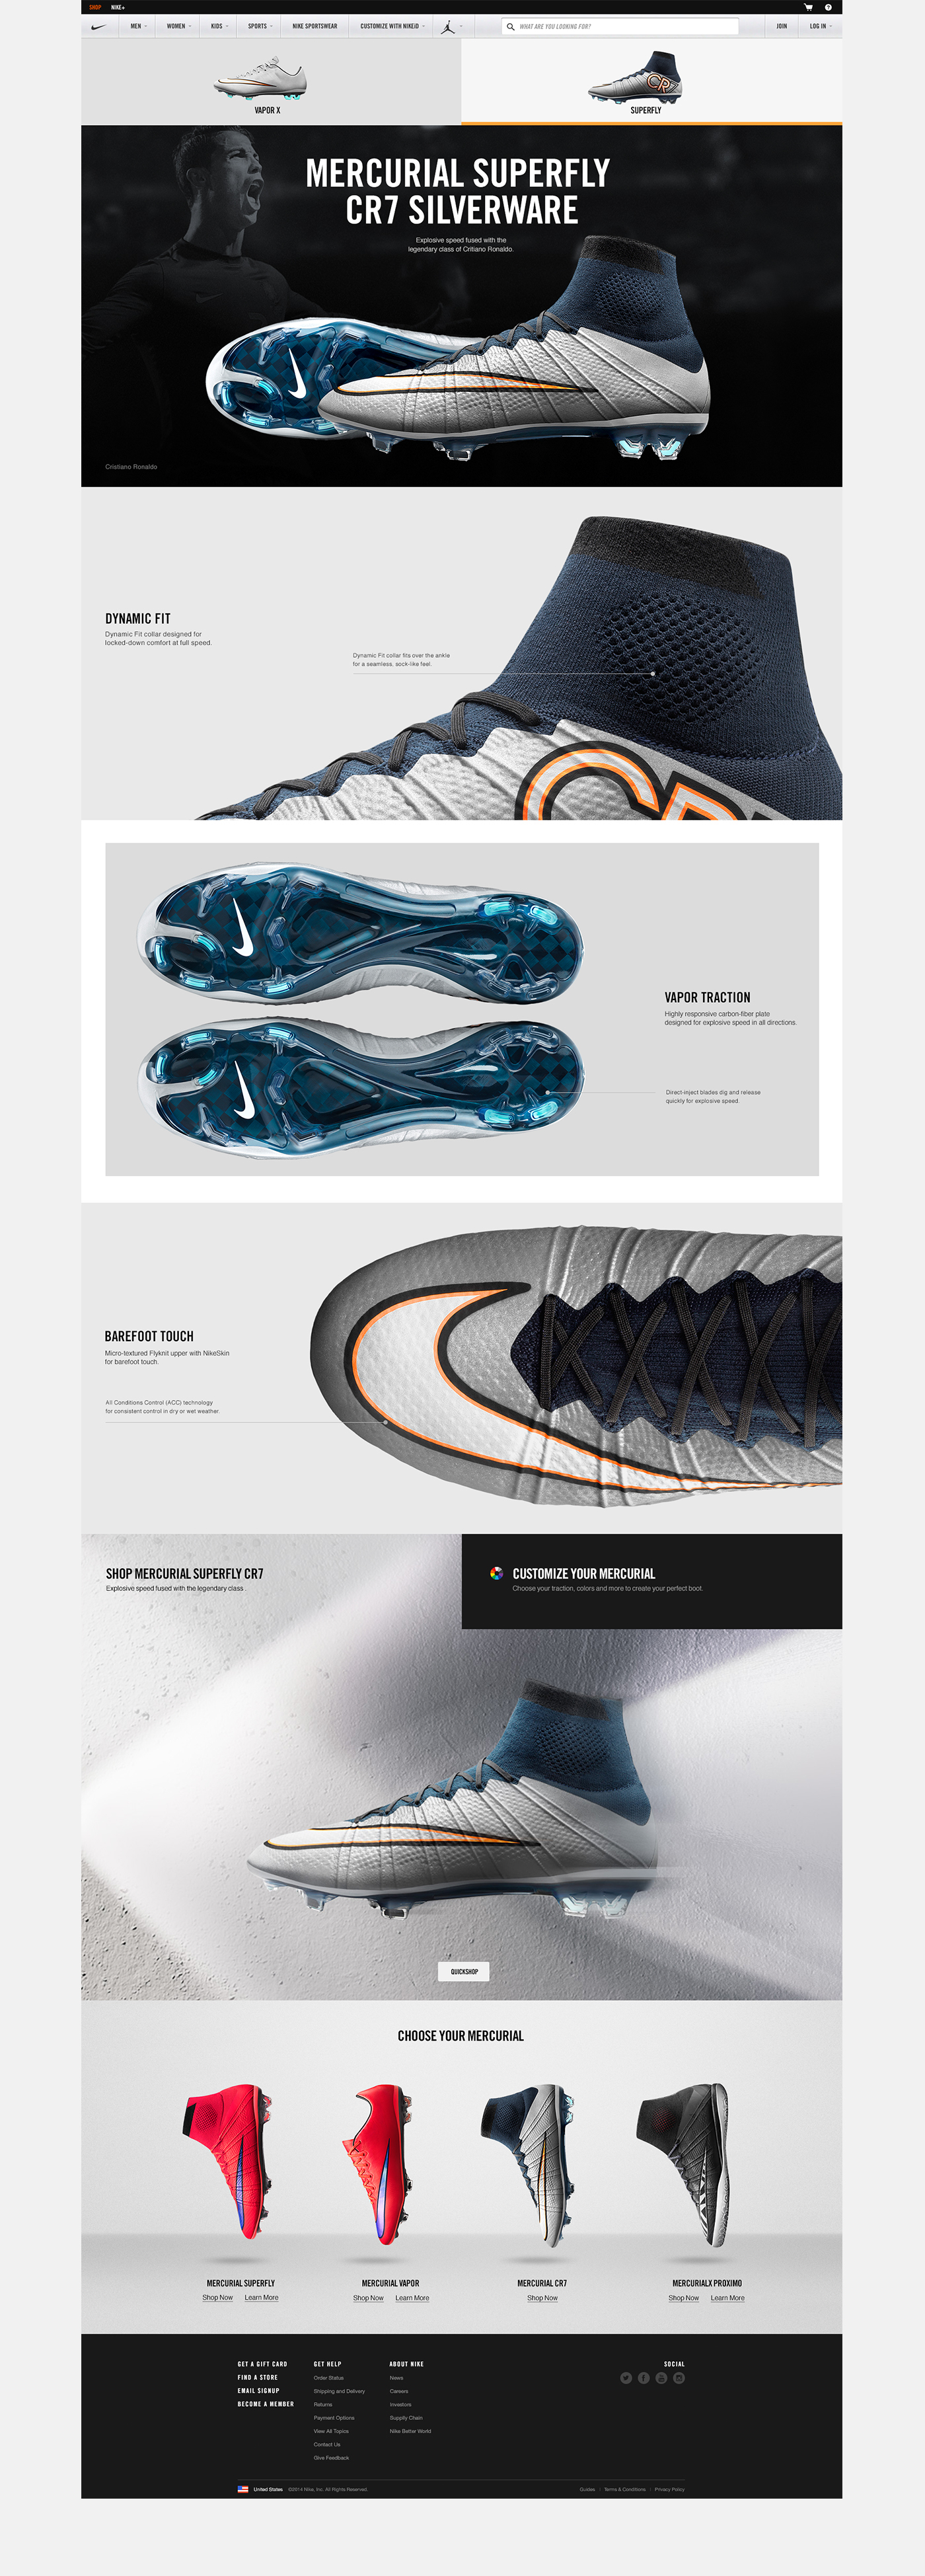 nike.com Nike editorial landing page athlete editorial product story page Product Detail Page